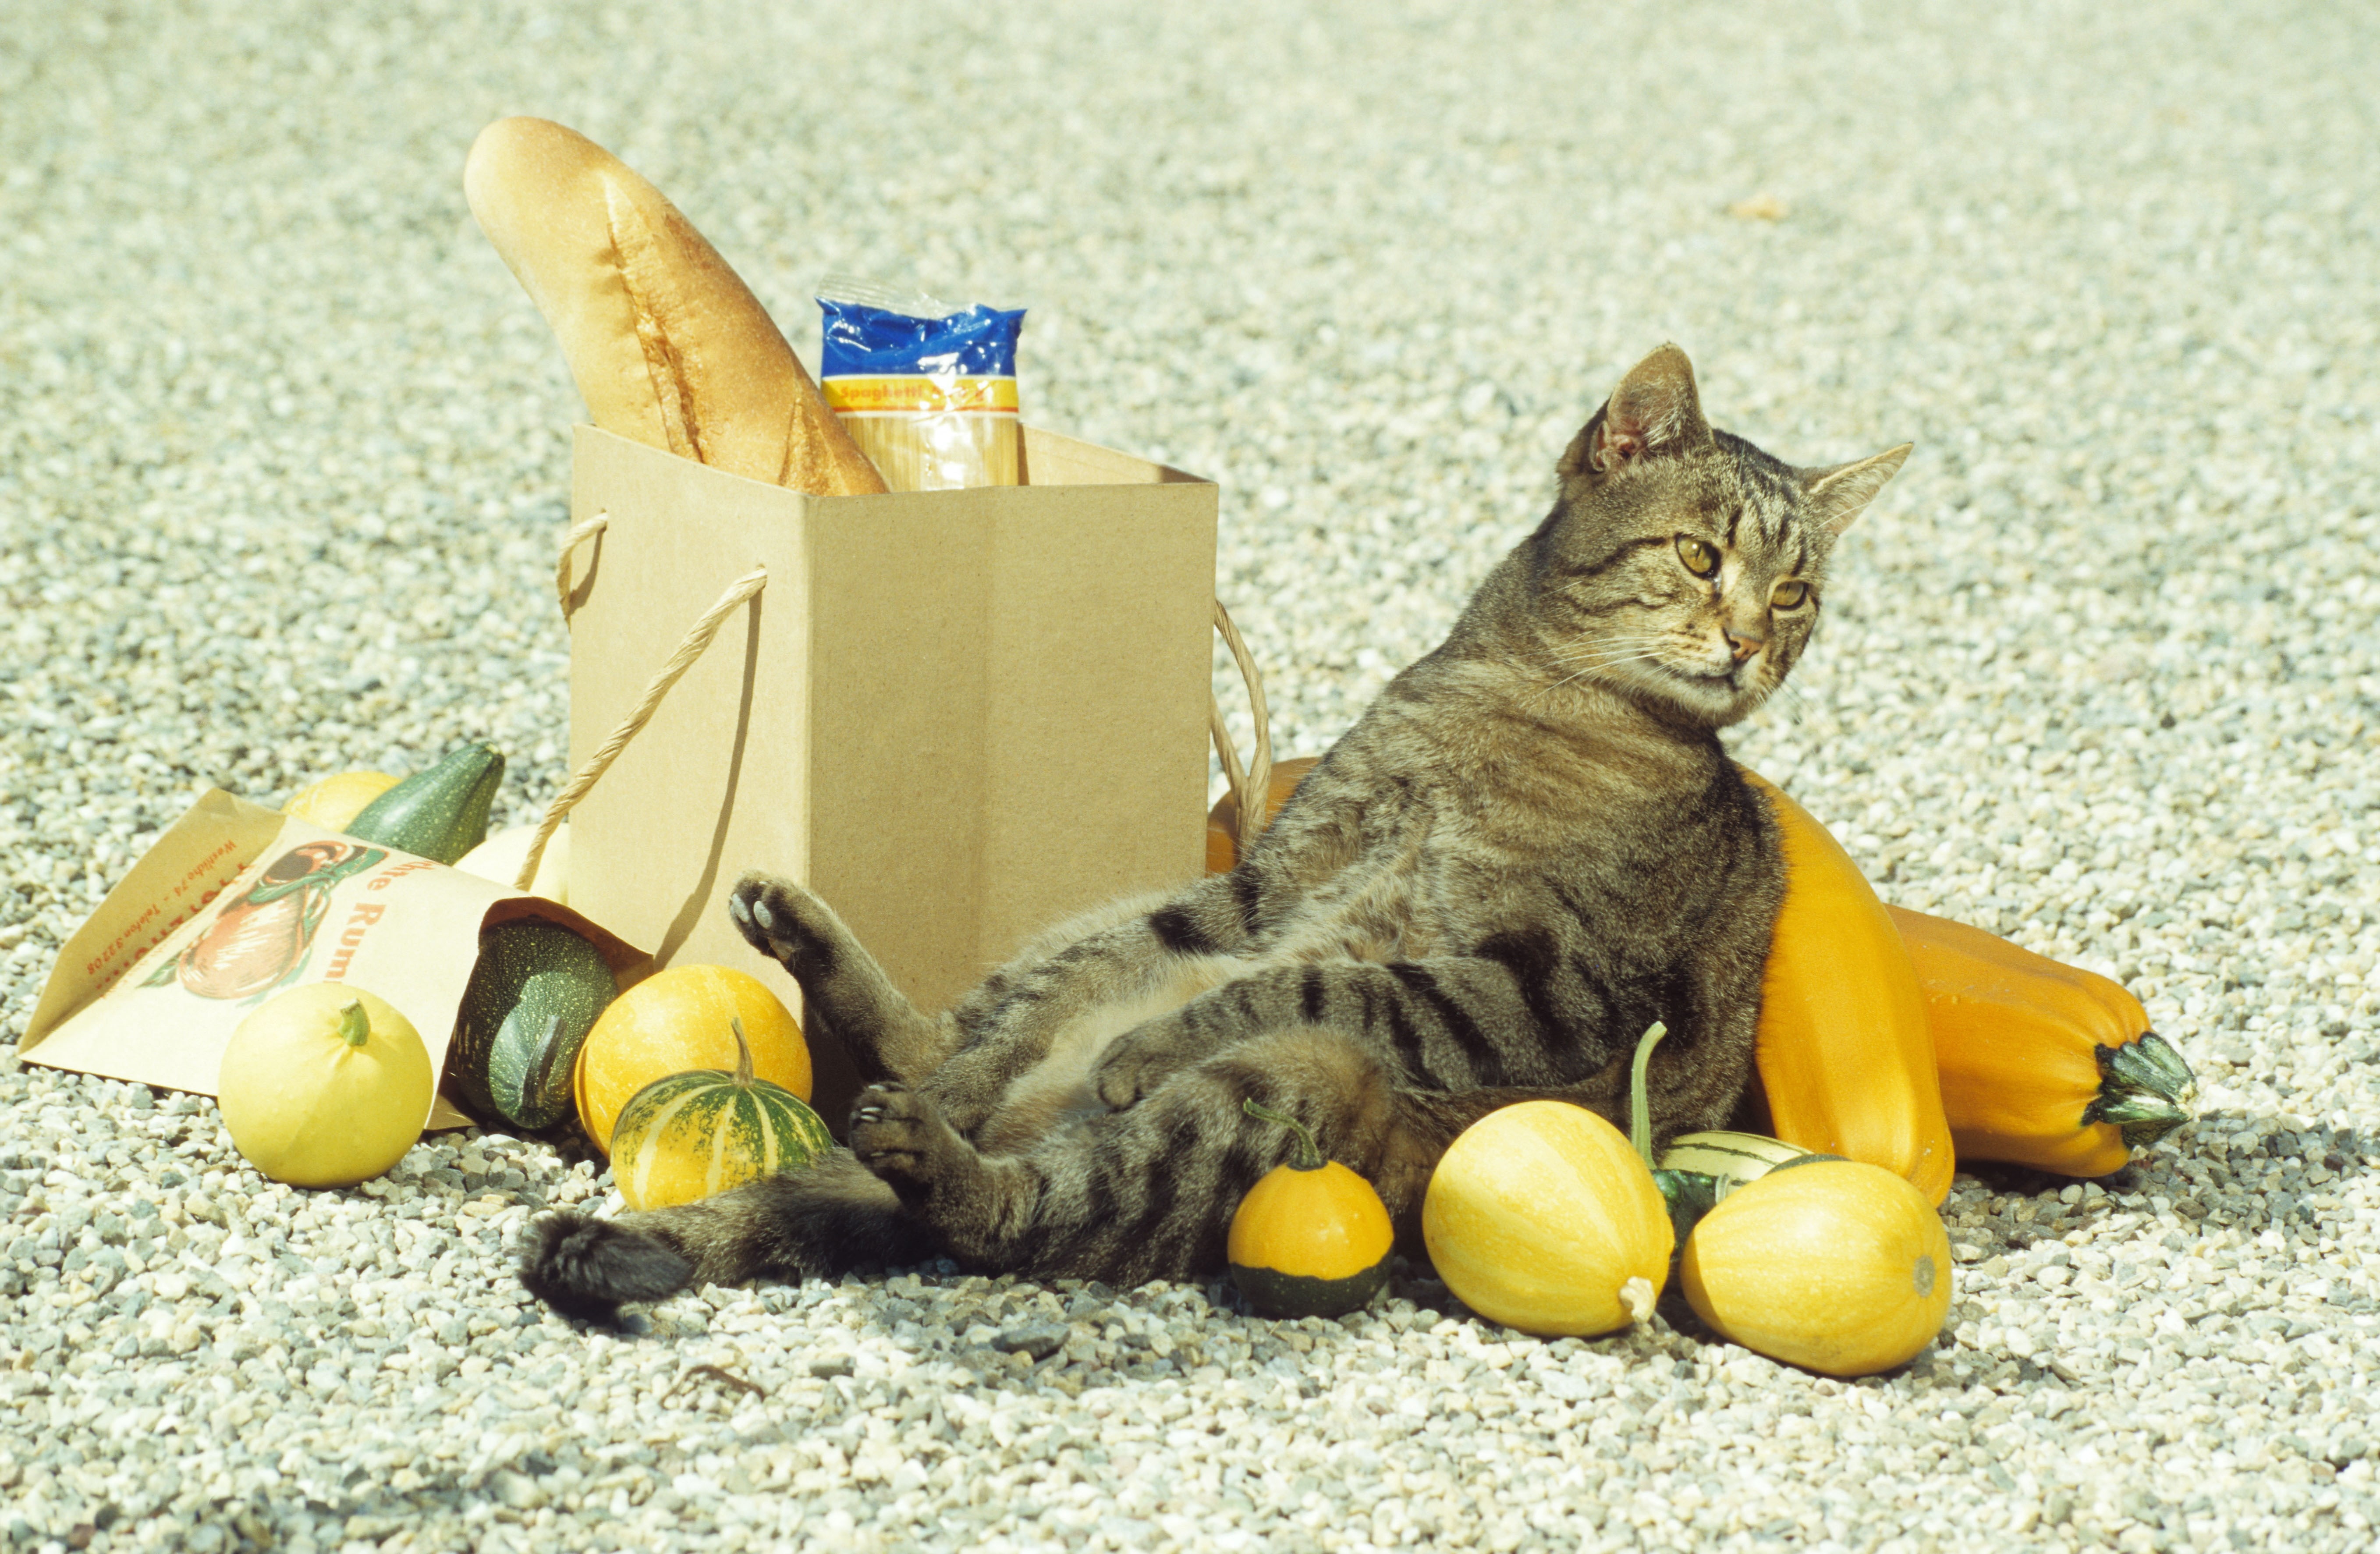 Cat, Bag, Fruit, Sitting, Funny, animal themes, mammal, one animal